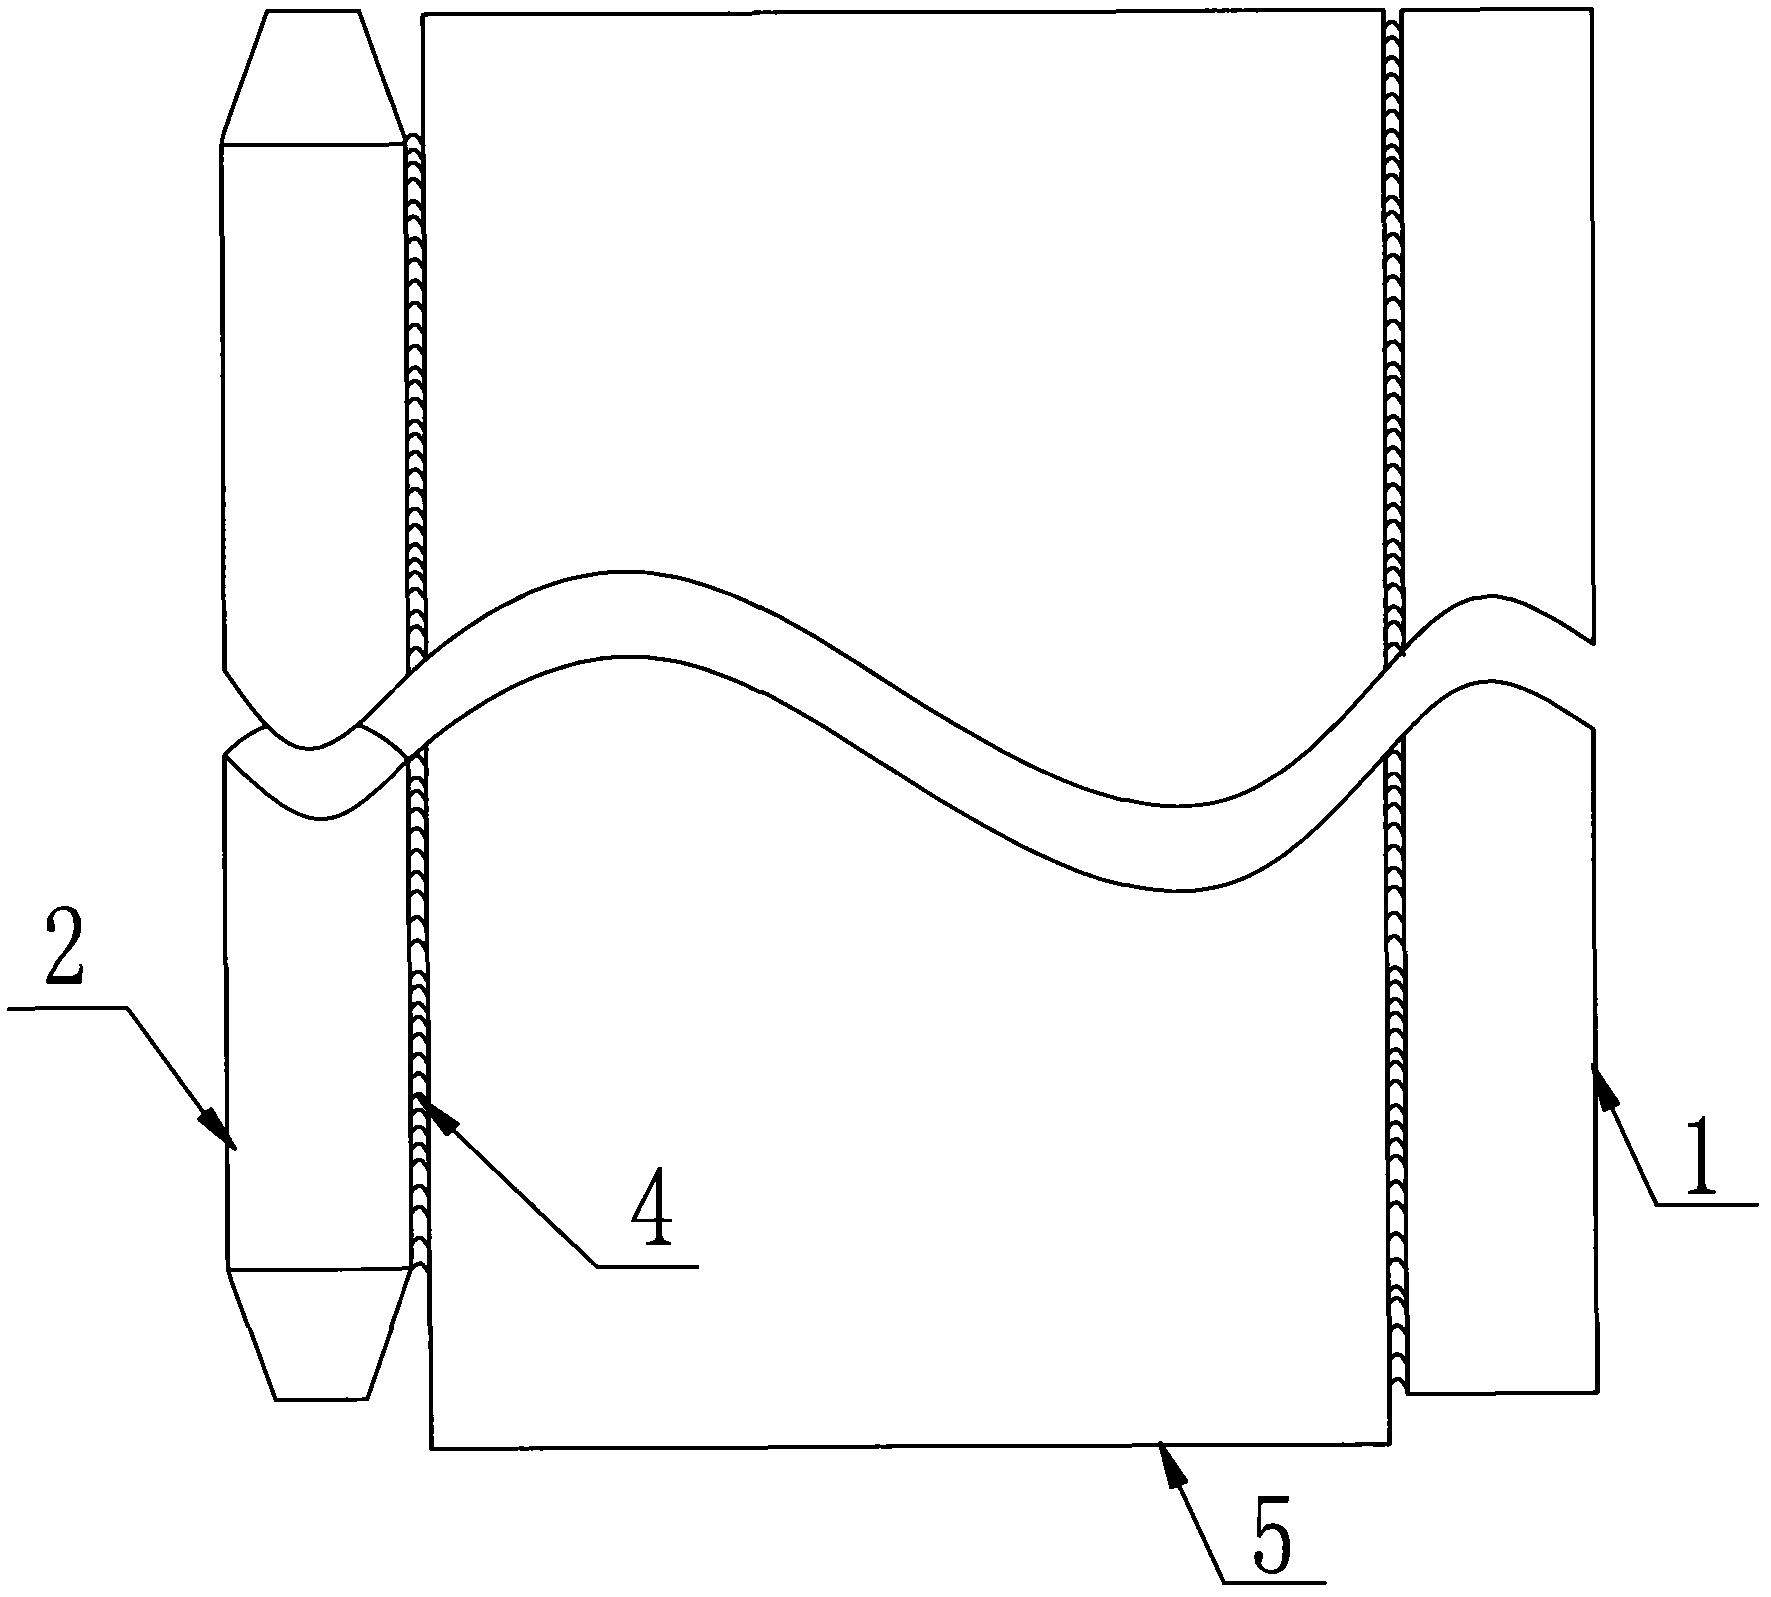 Locking opening structure of steel cofferdam and construction method for locking opening structure